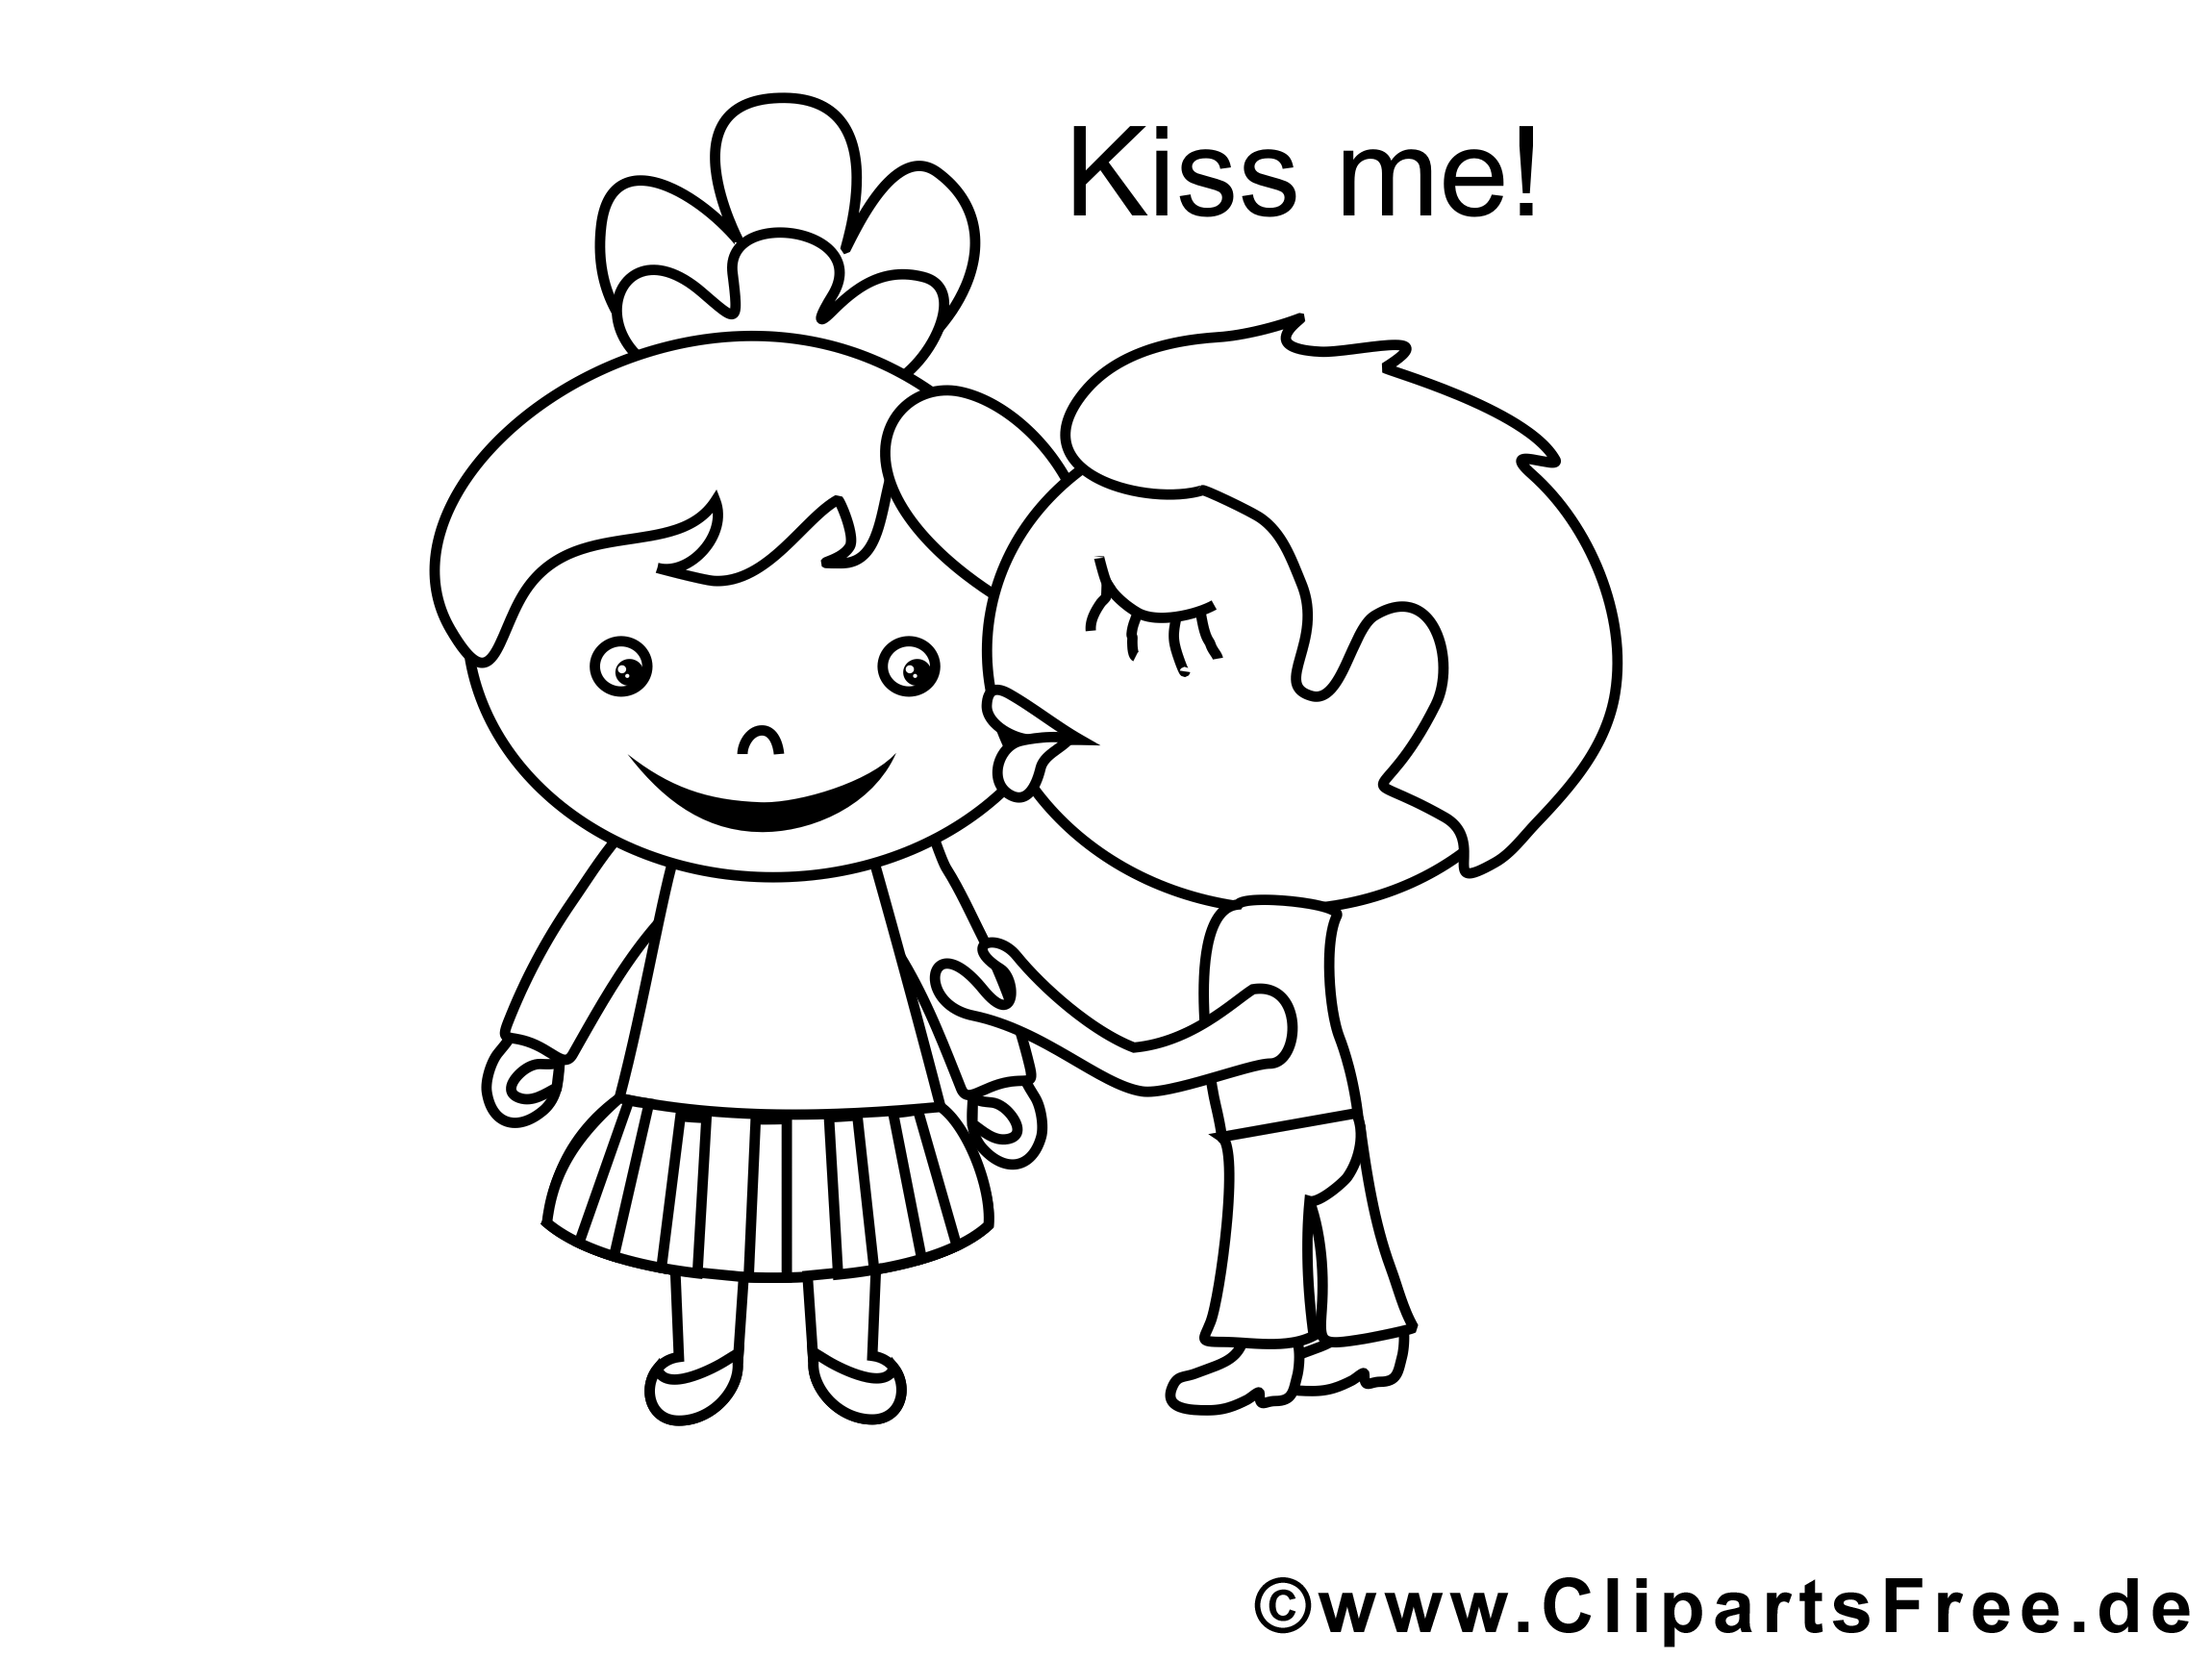 Embrasse-moi illustration – Saint-valentin à imprimer